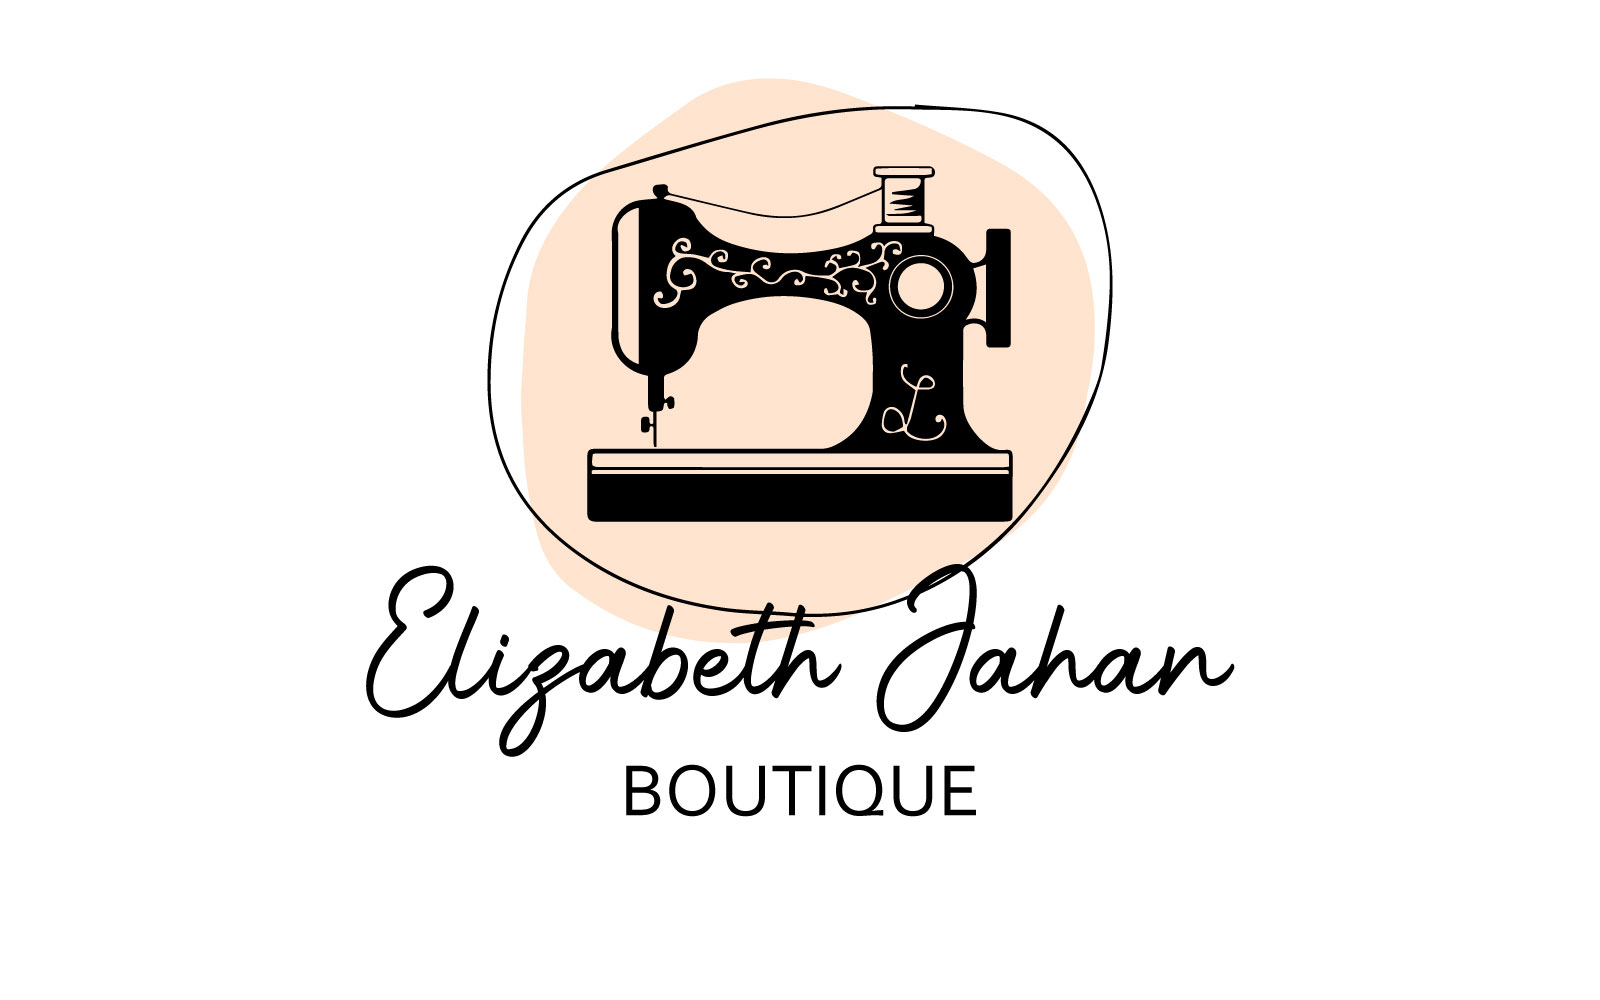 Sewing Machine Logo Fashion Business Graphic by Setia69 · Creative Fabrica